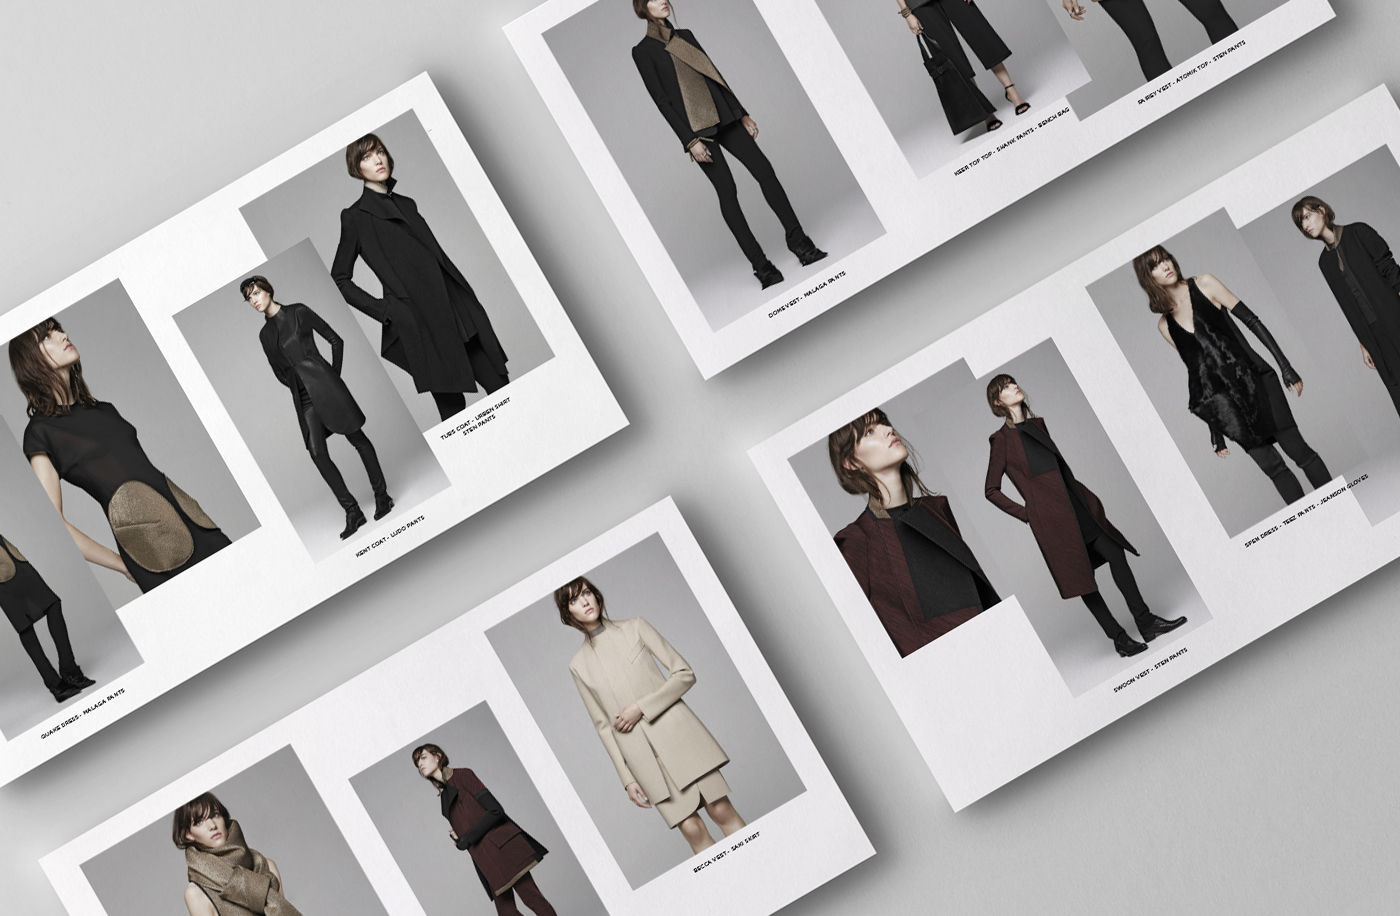 Lookbook design designer Montreal newsletter clothes luxury models